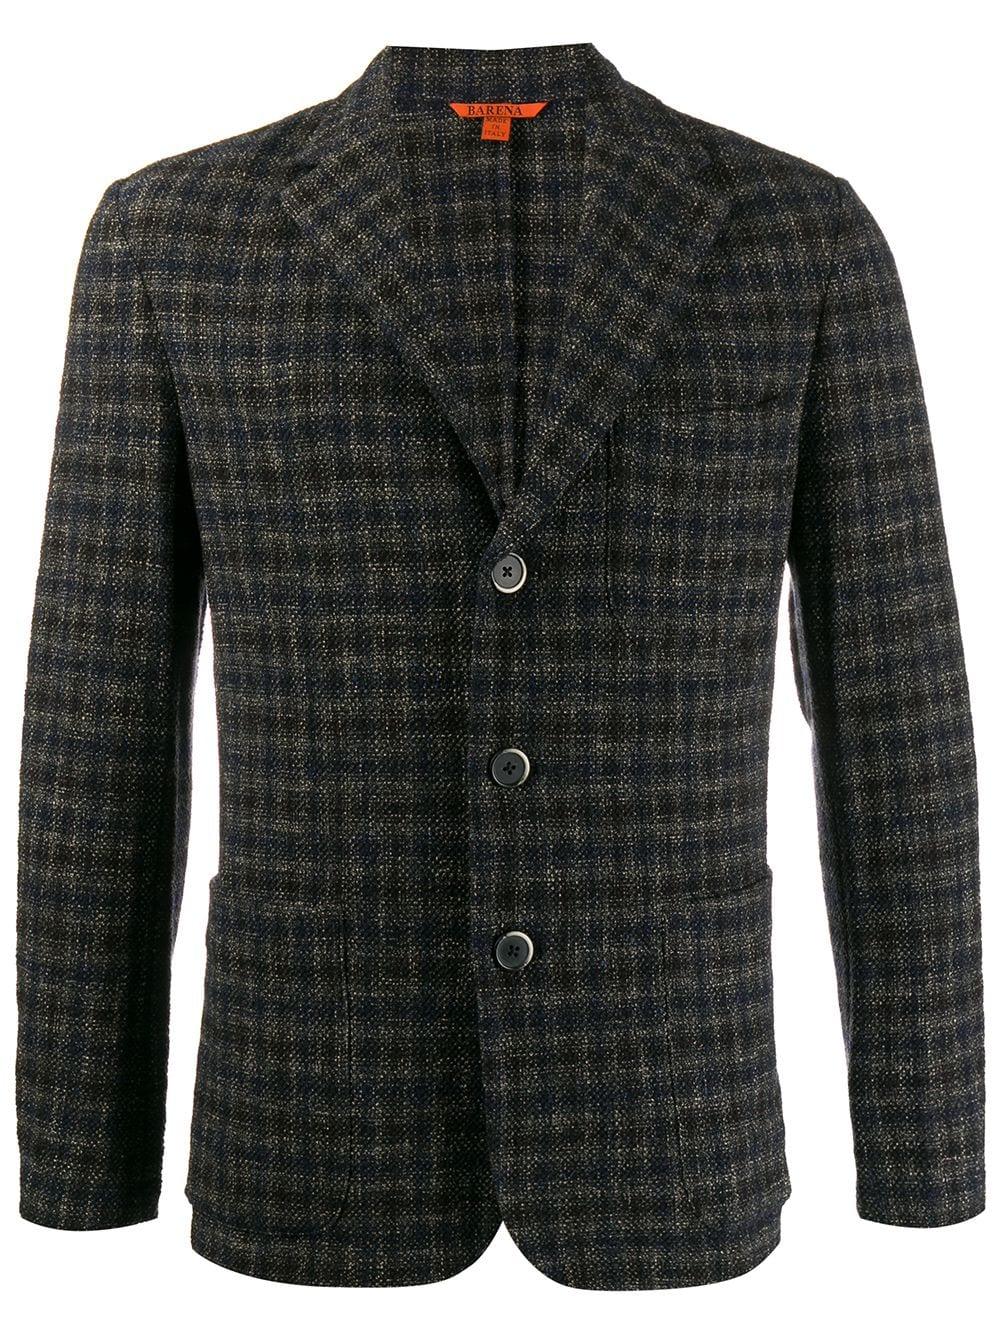 Barena Wool Checkered Knit Blazer in Black for Men - Lyst